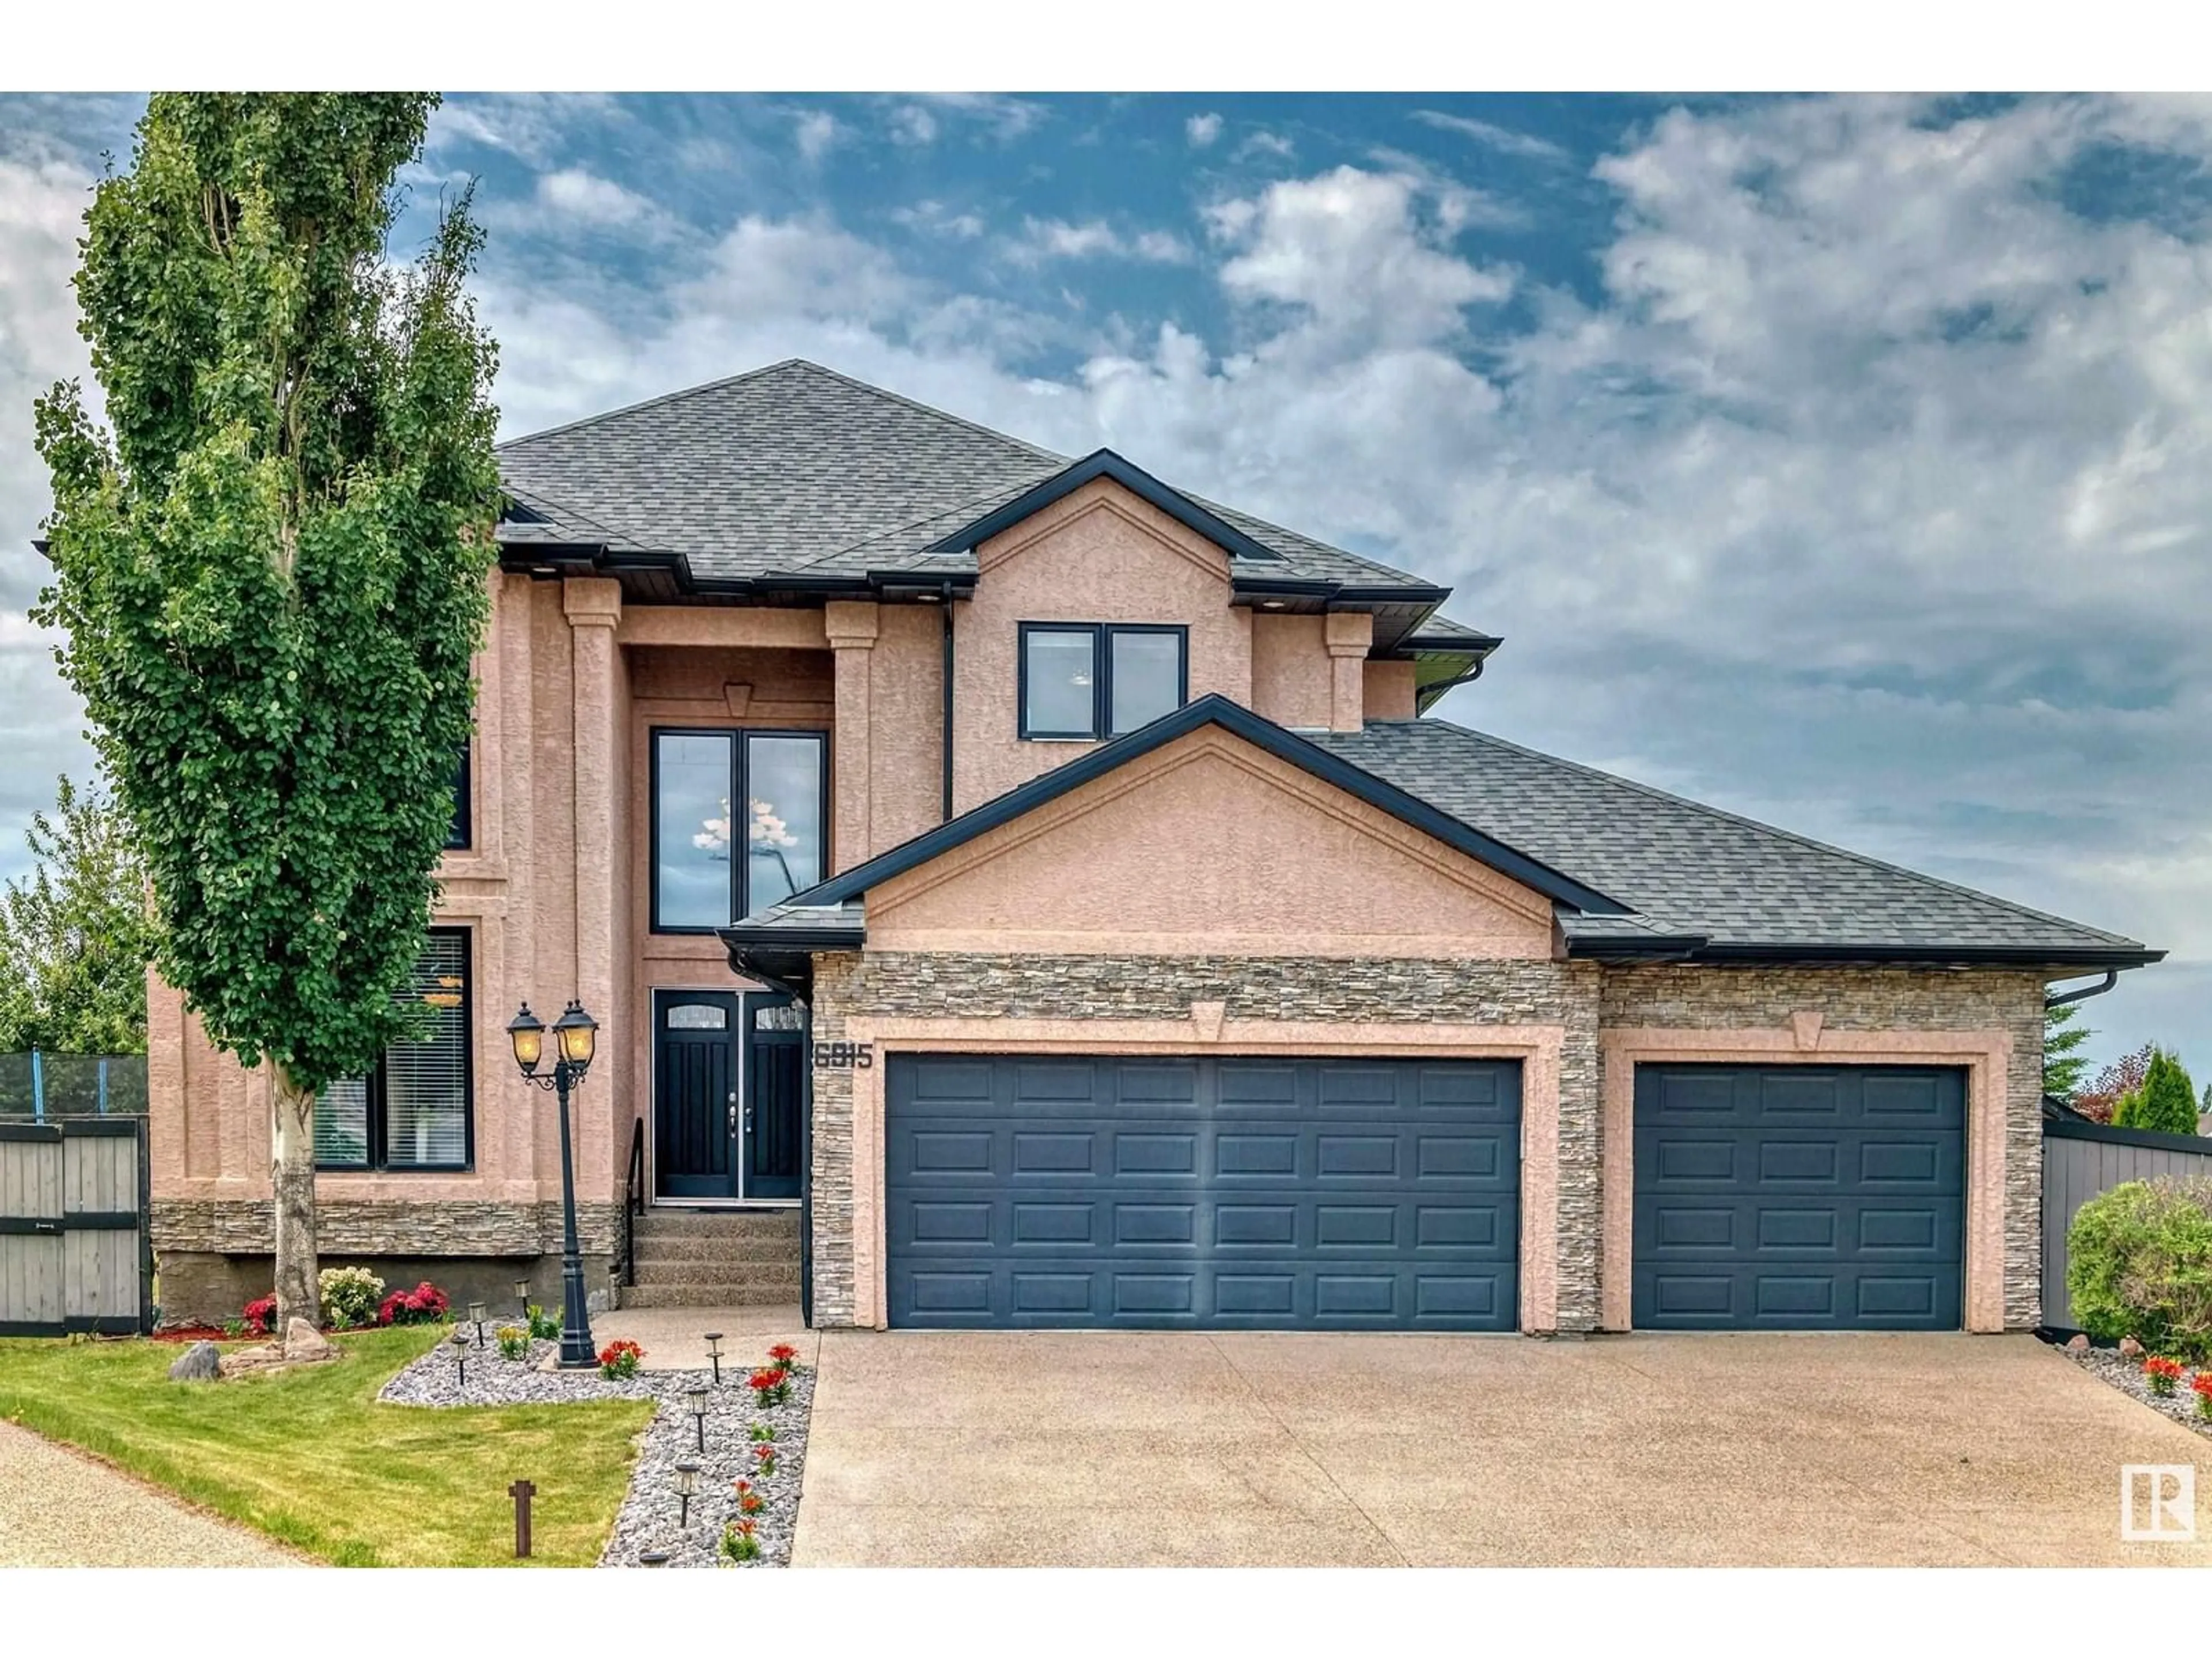 Home with brick exterior material for 6915 18 AV SW, Edmonton Alberta T6X0C9